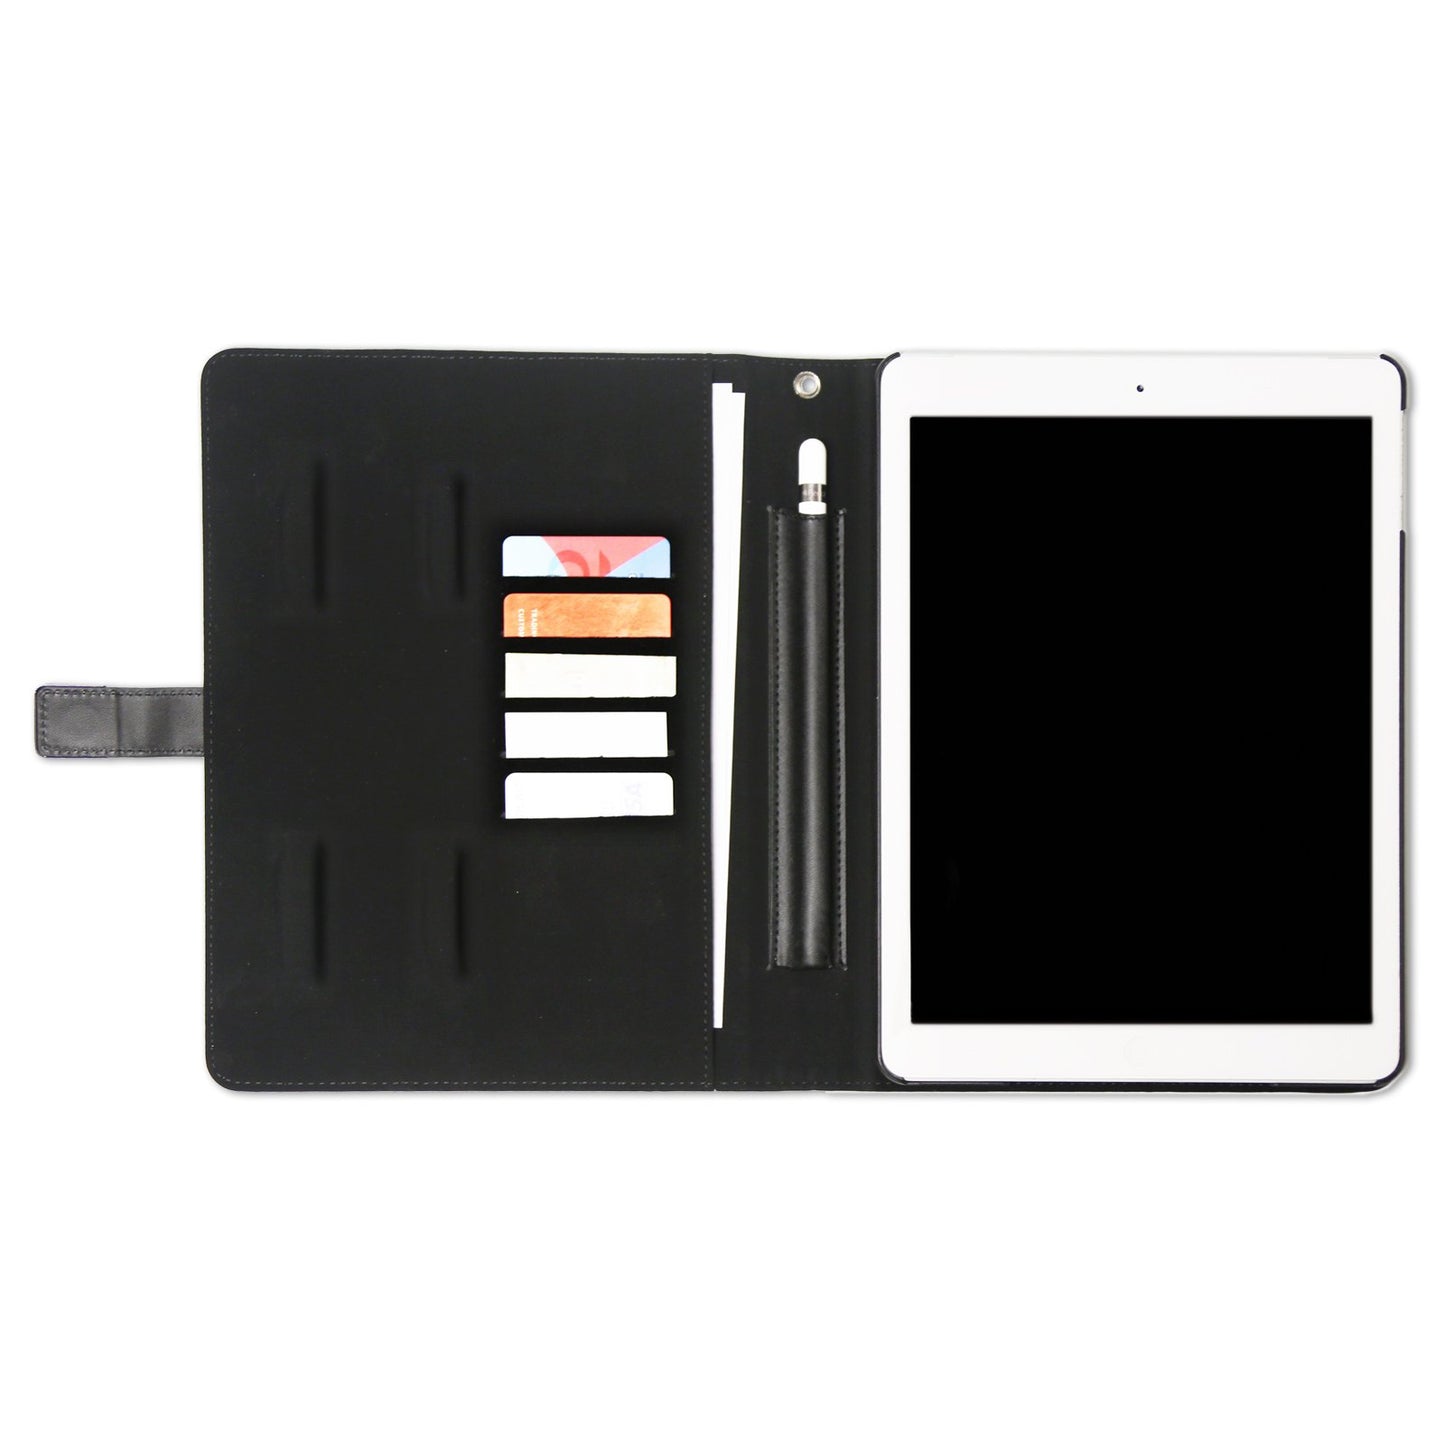 Personalised iPad Case with Sleeping Unicorn and Rainbow on Cartoon Stripes